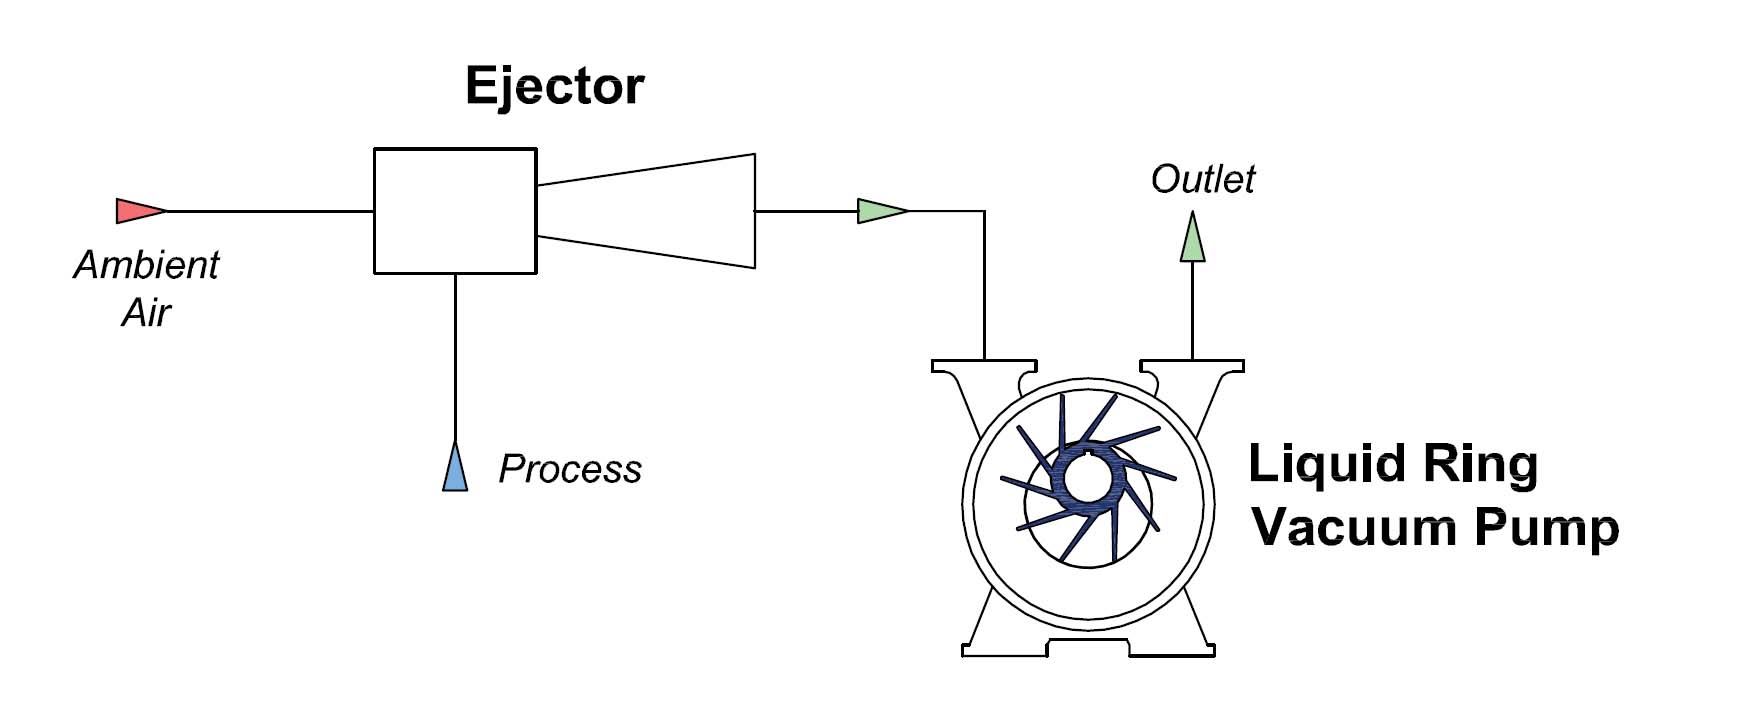 Atmospheric Air Ejector / Liquid Ring Pump Ejector for boosting Liquid Ring Pump Vacuum